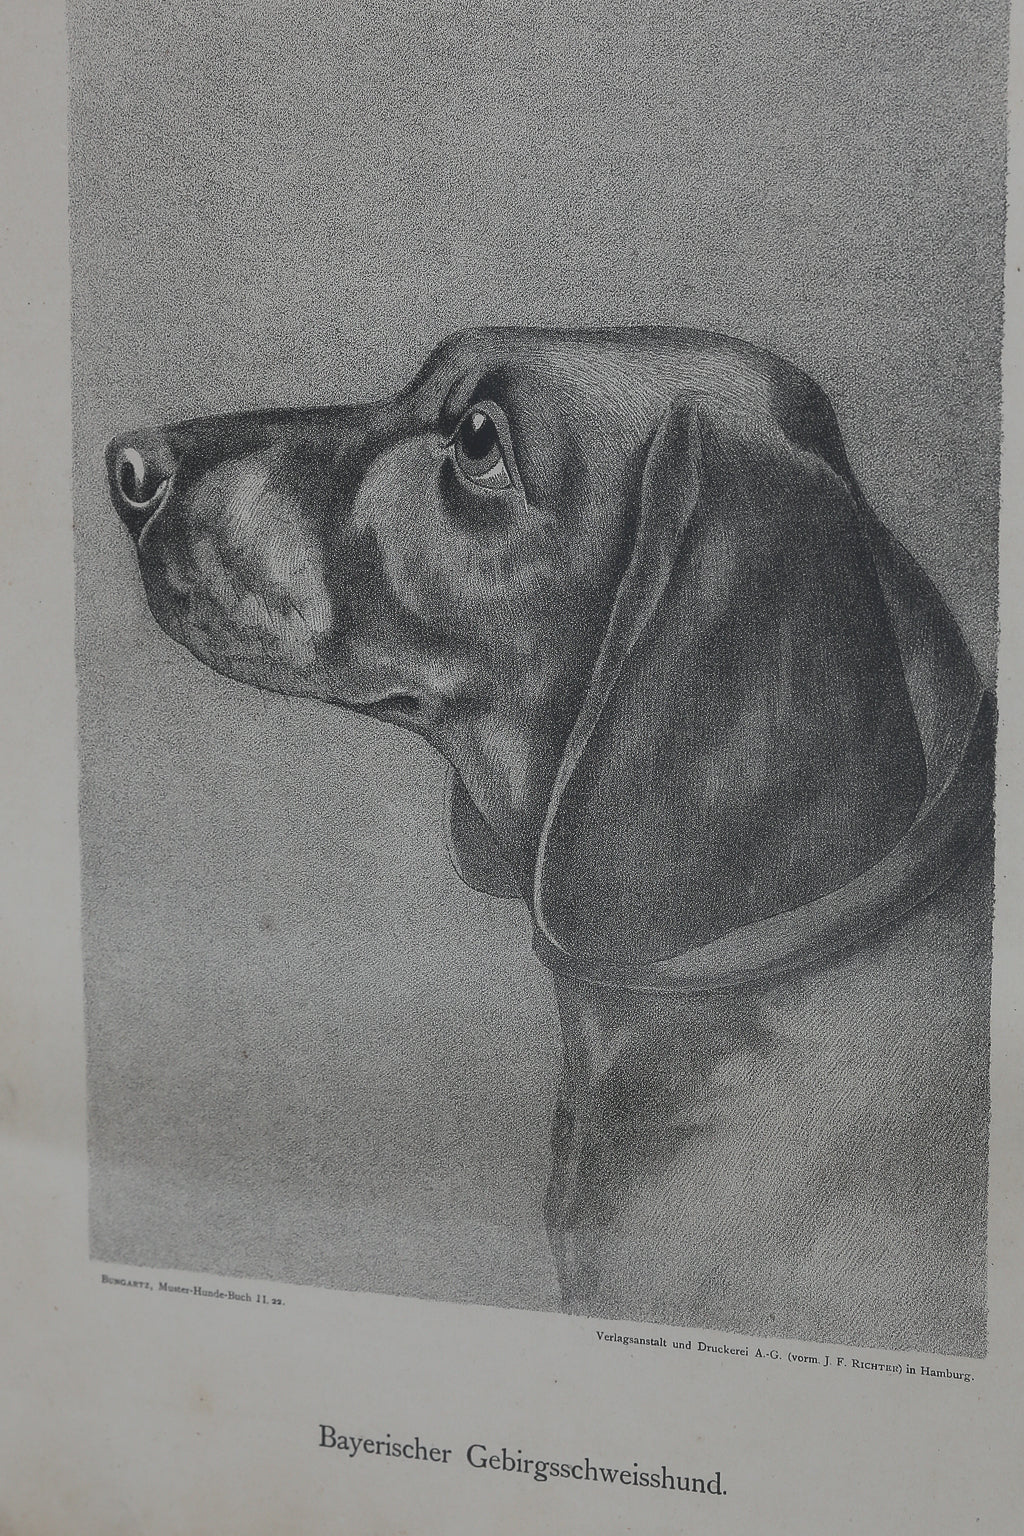 Jean Bungartz Dog Art Head Study Print